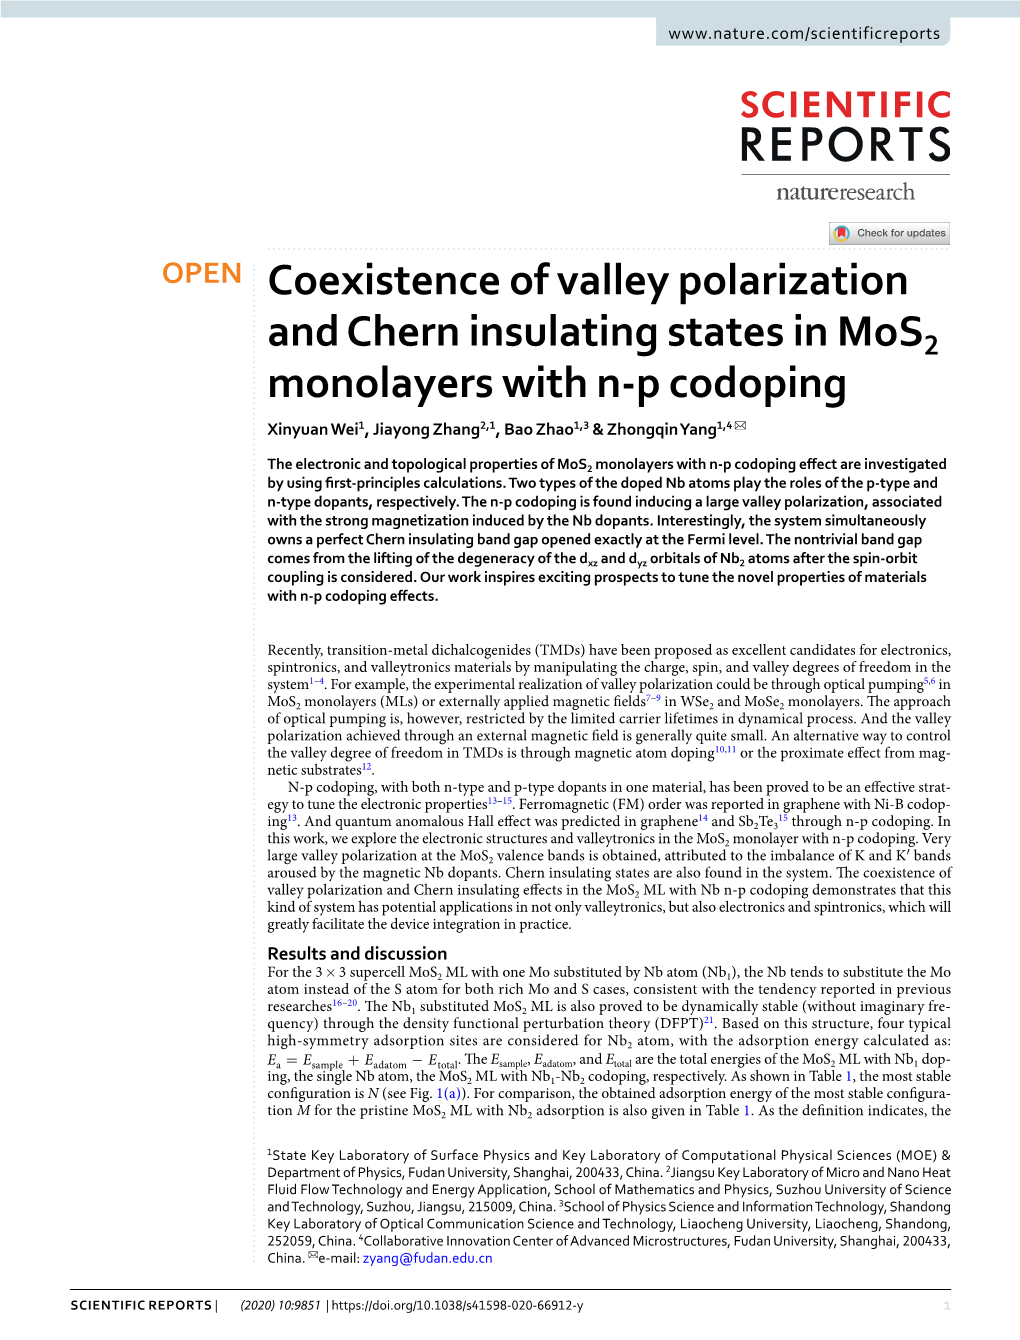 Coexistence of Valley Polarization and Chern Insulating States in Mos2 Monolayers with N-P Codoping Xinyuan Wei1, Jiayong Zhang2,1, Bao Zhao1,3 & Zhongqin Yang1,4 ✉